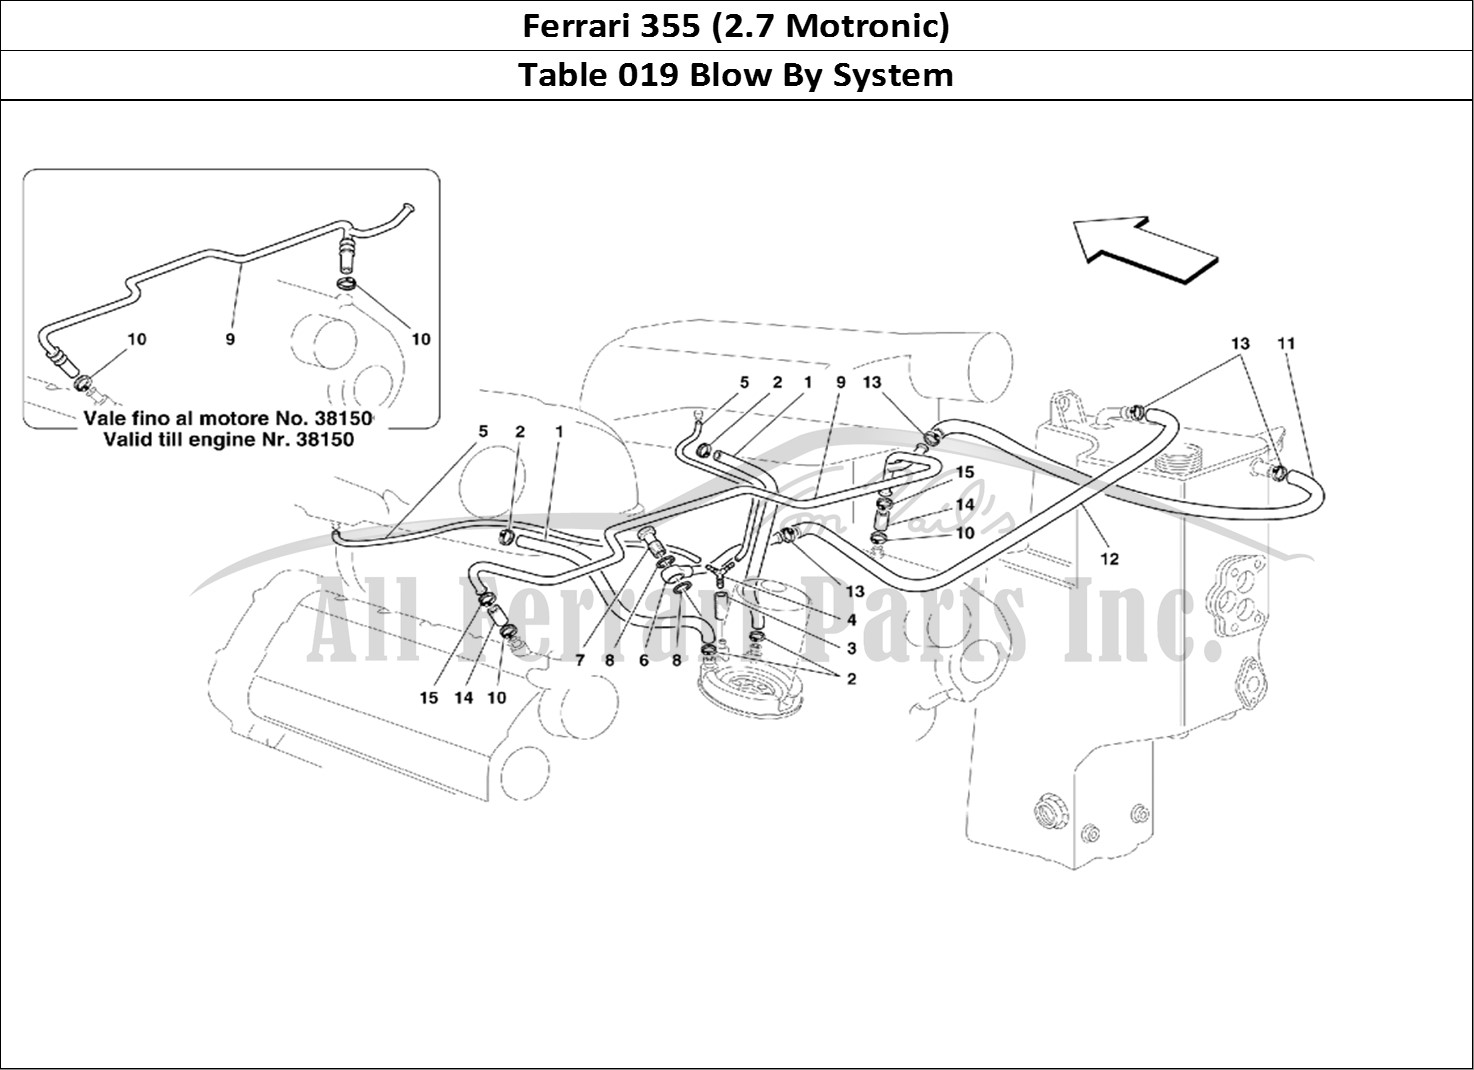 Ferrari Parts Ferrari 355 (2.7 Motronic) Page 019 Blow - By System